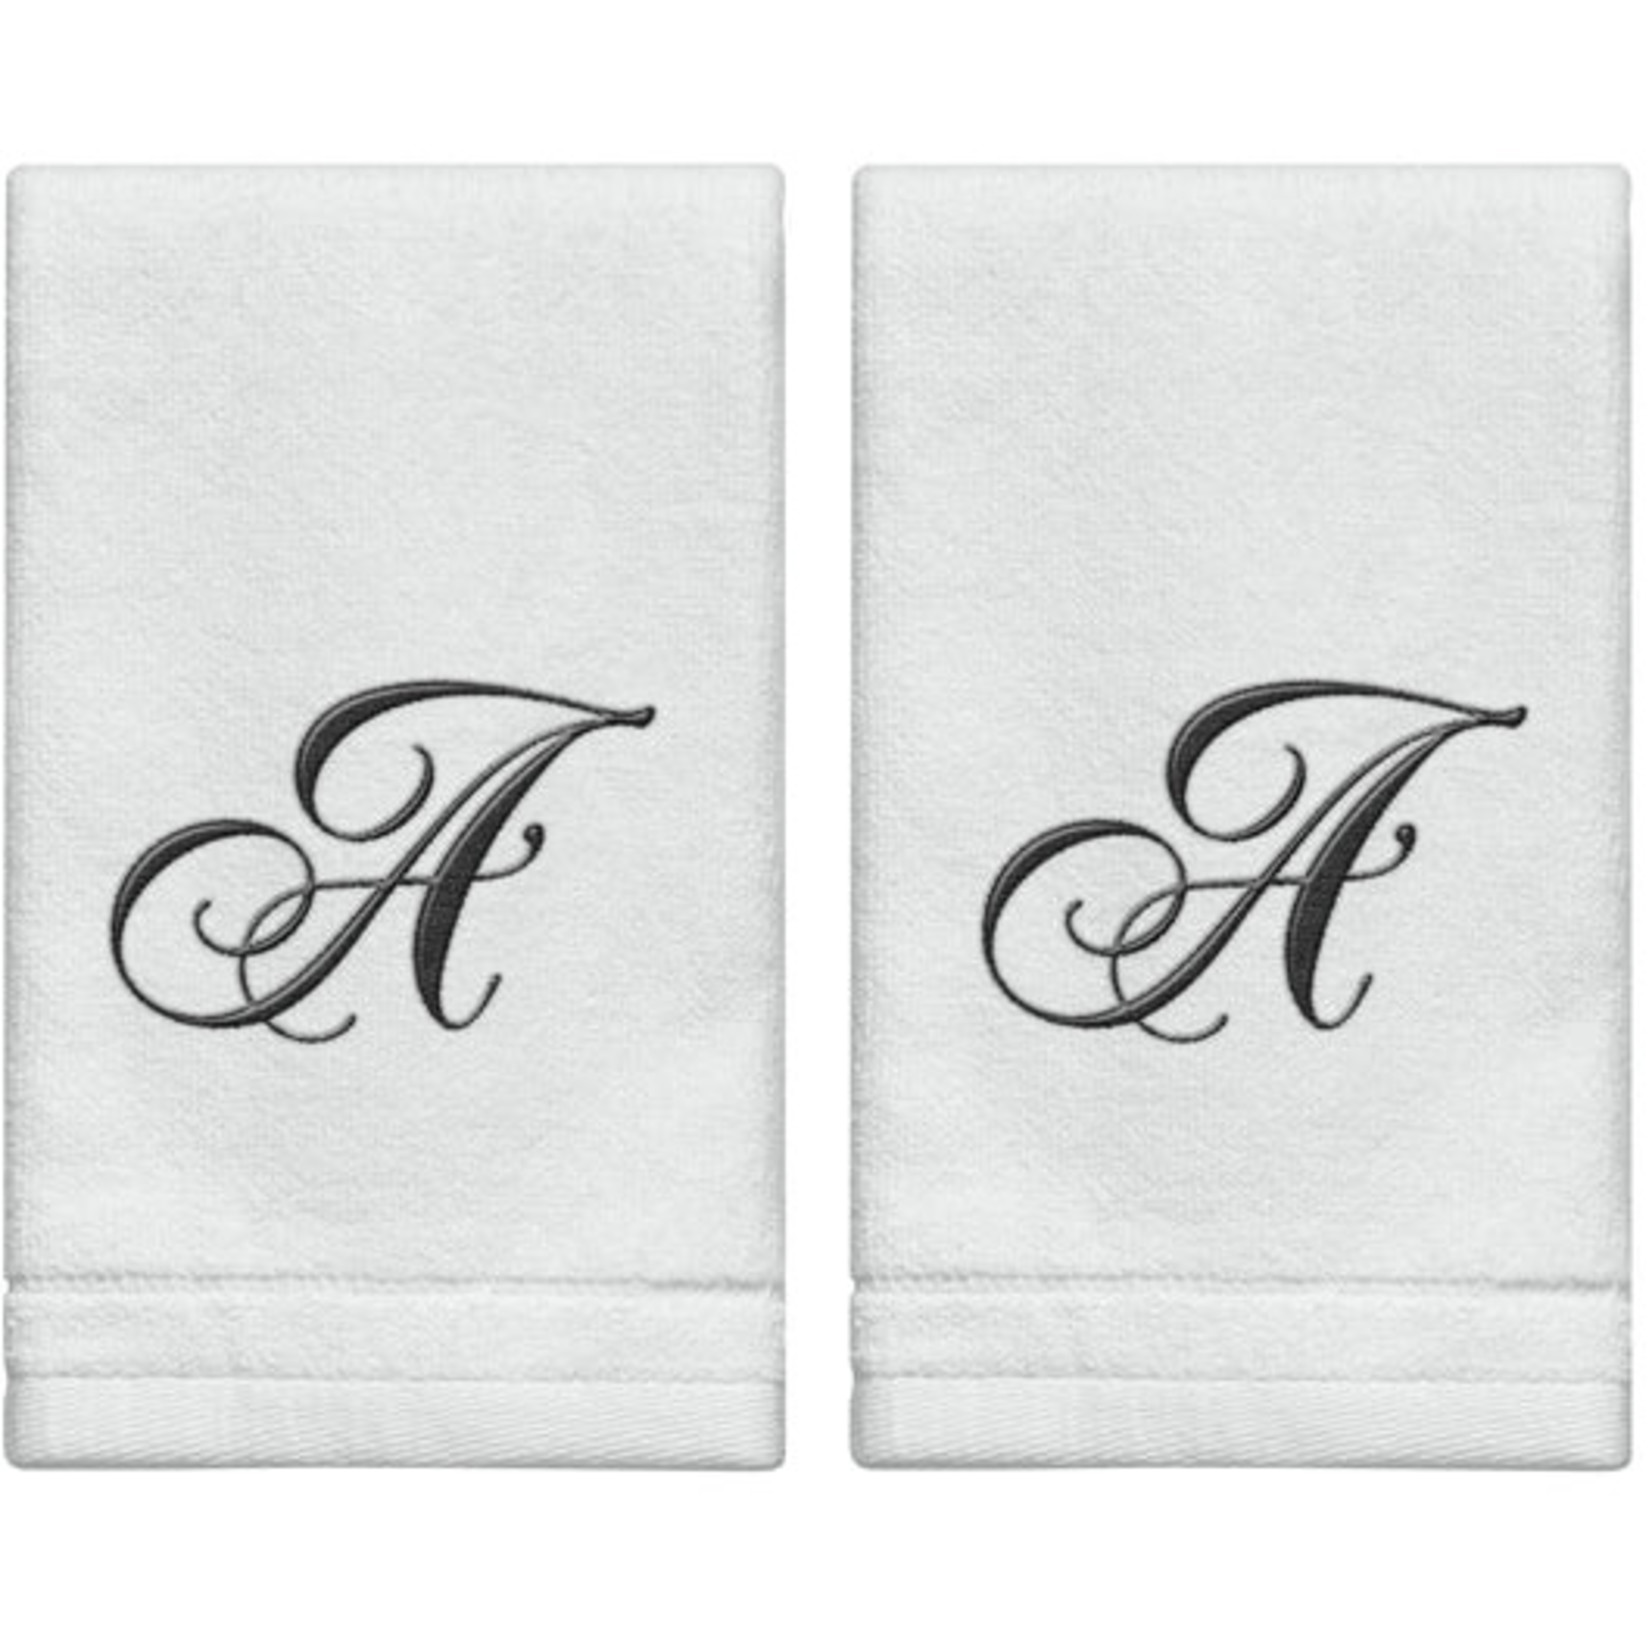 MWA-07190 A - Cotton velour monogram towel () - White/Black - The